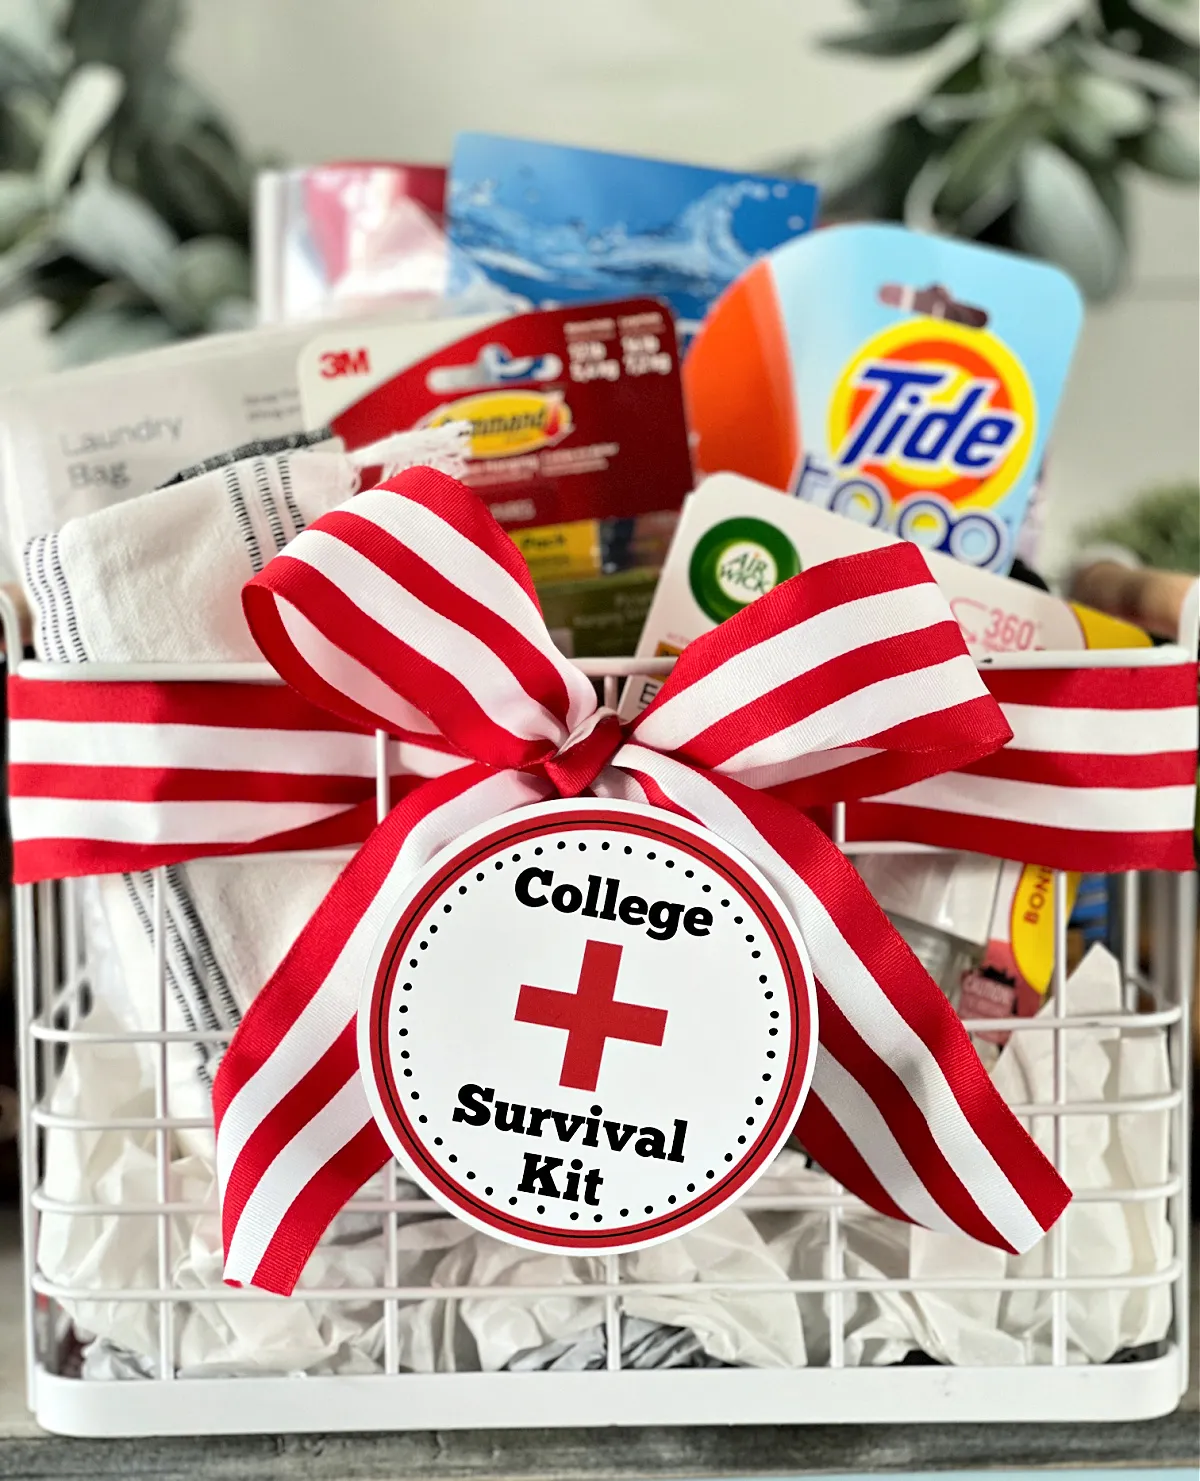 College Survival Kit: